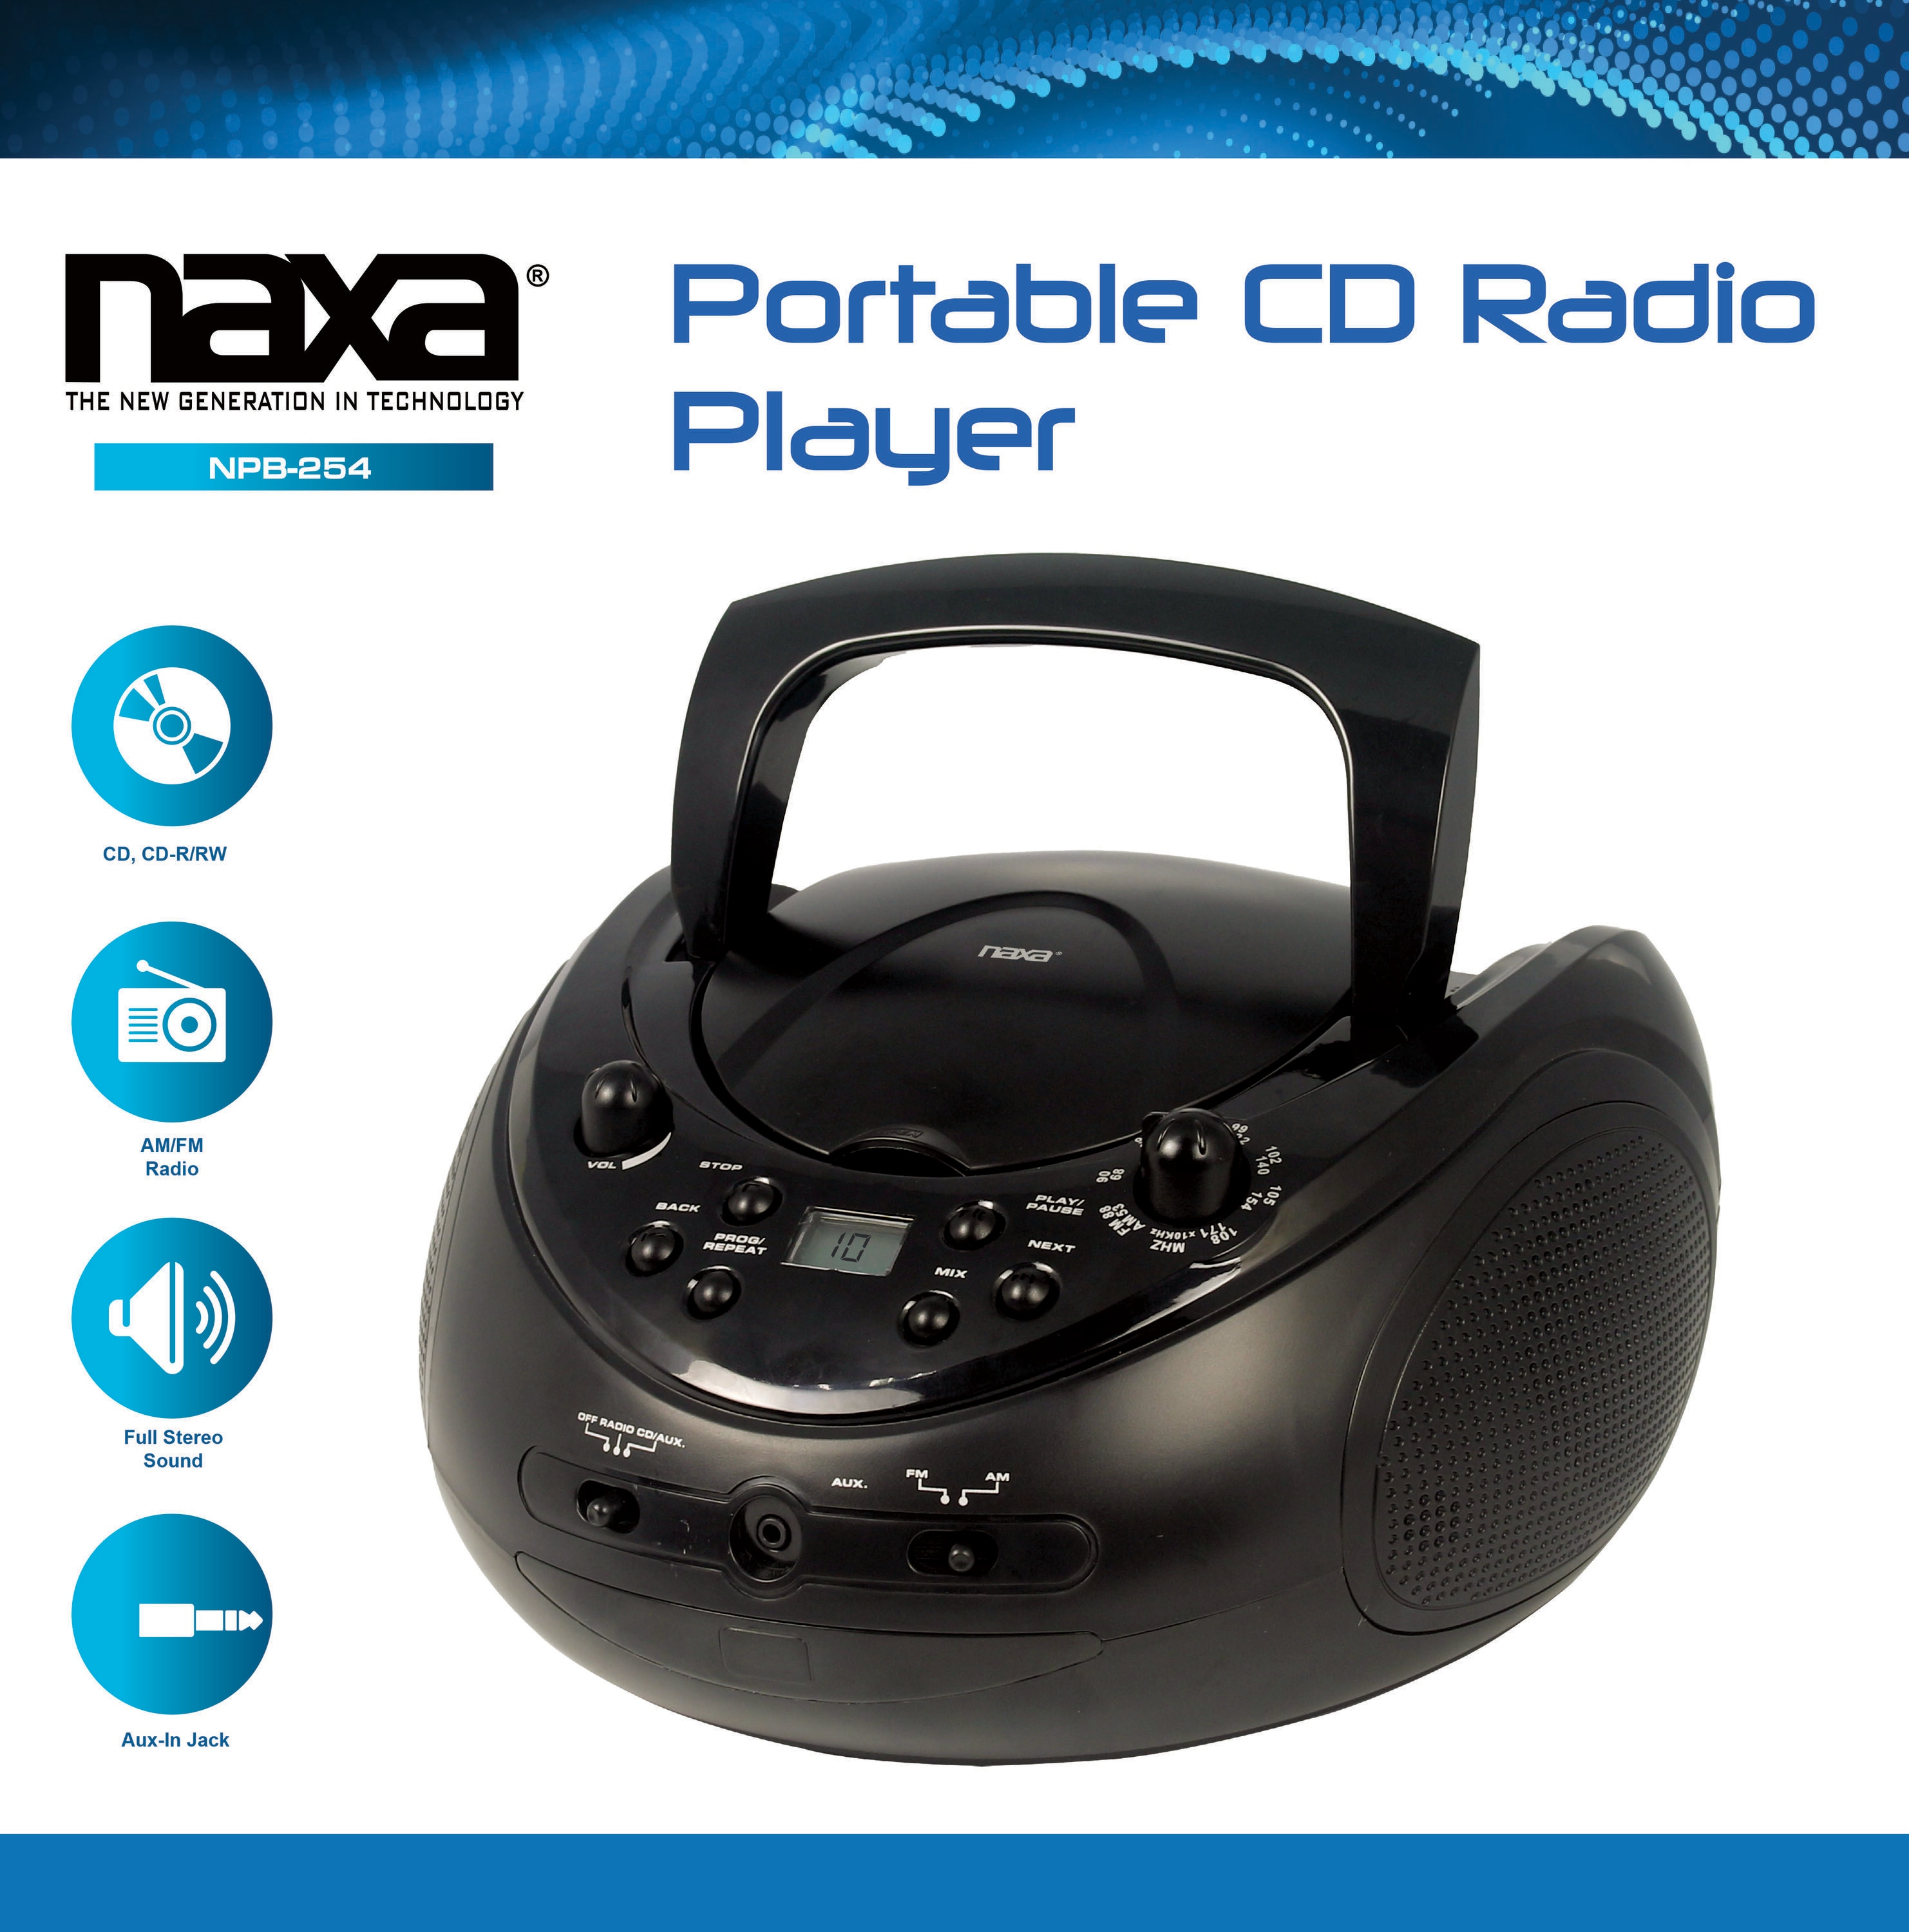 PROSCAN Elite Portable CD Boombox with AM/FM Radio (Black